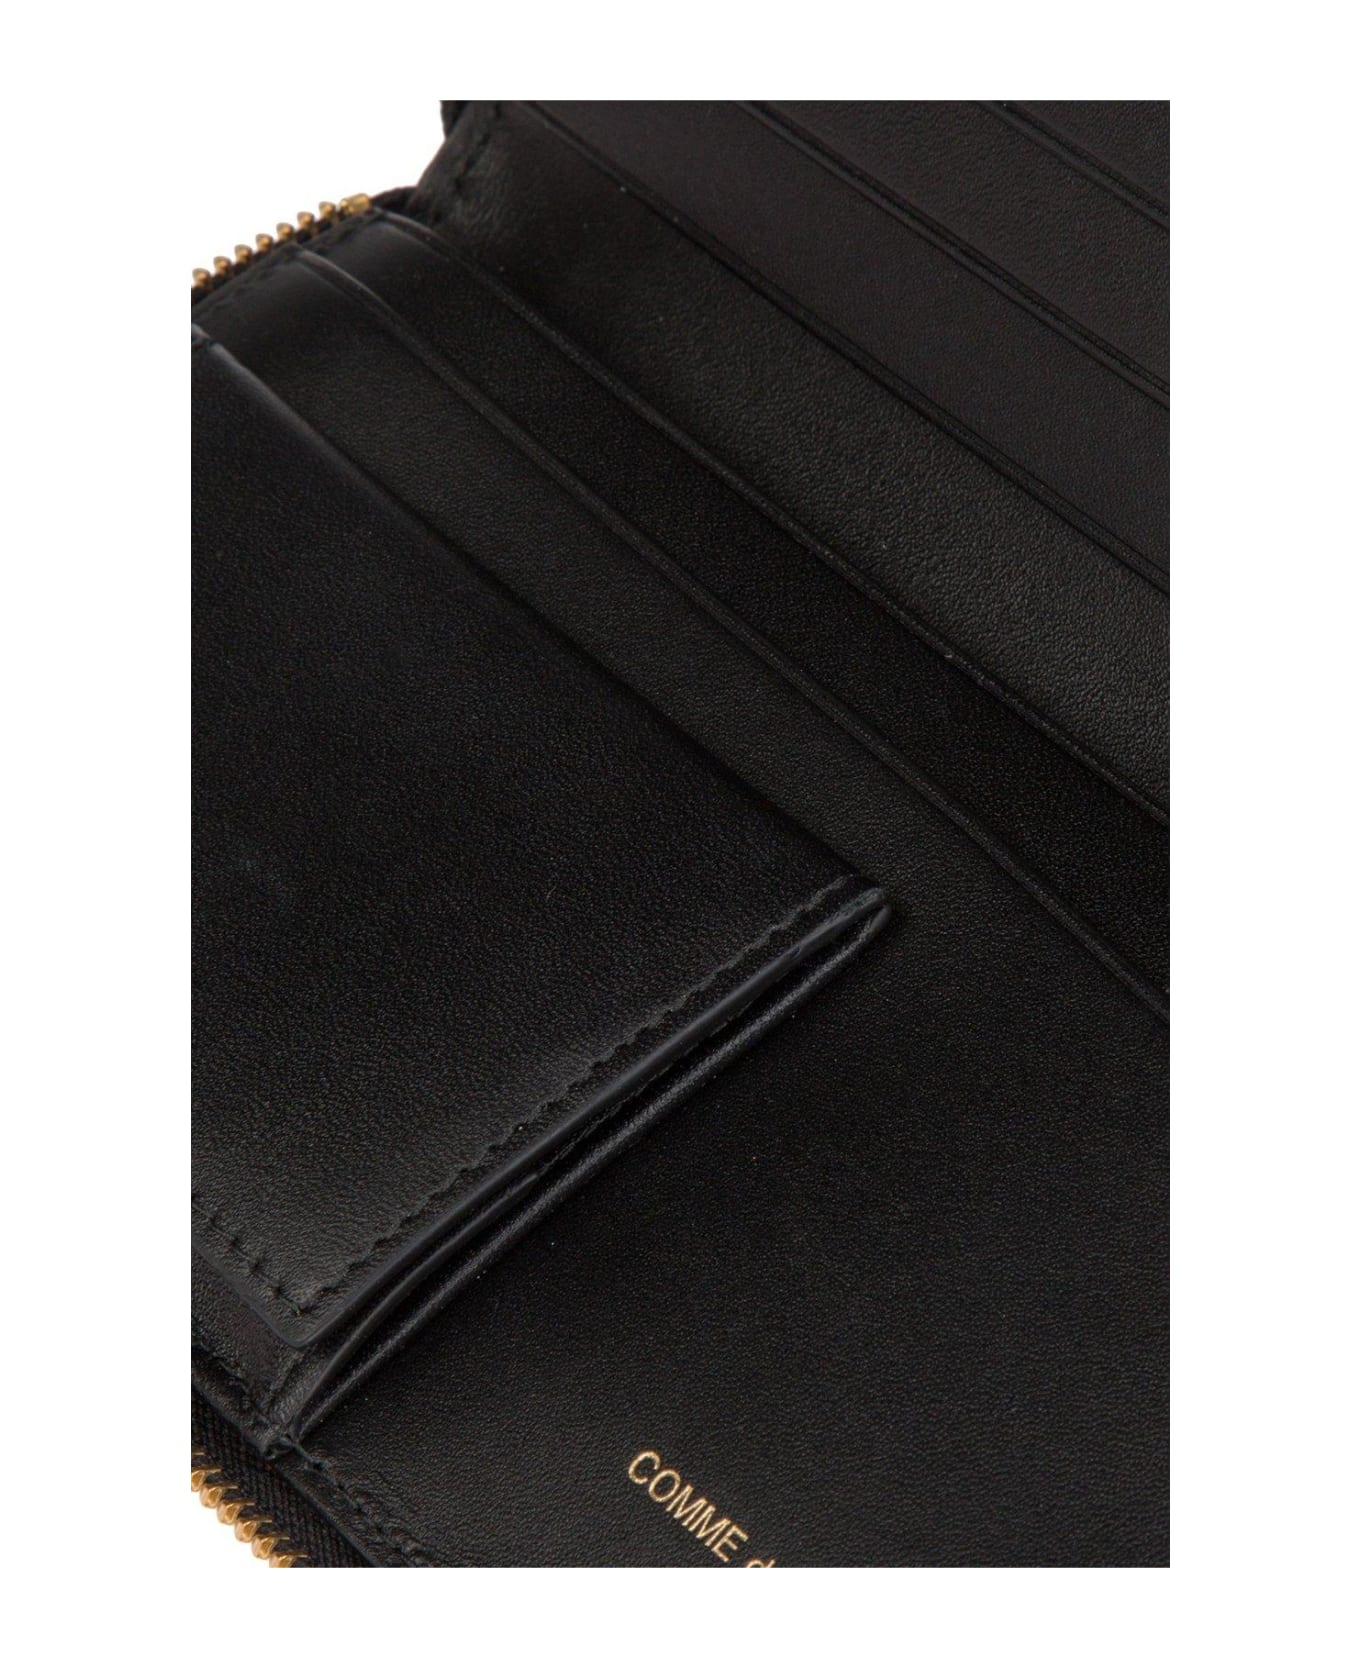 Comme des Garçons Wallet Logo Printed Zipped Wallet